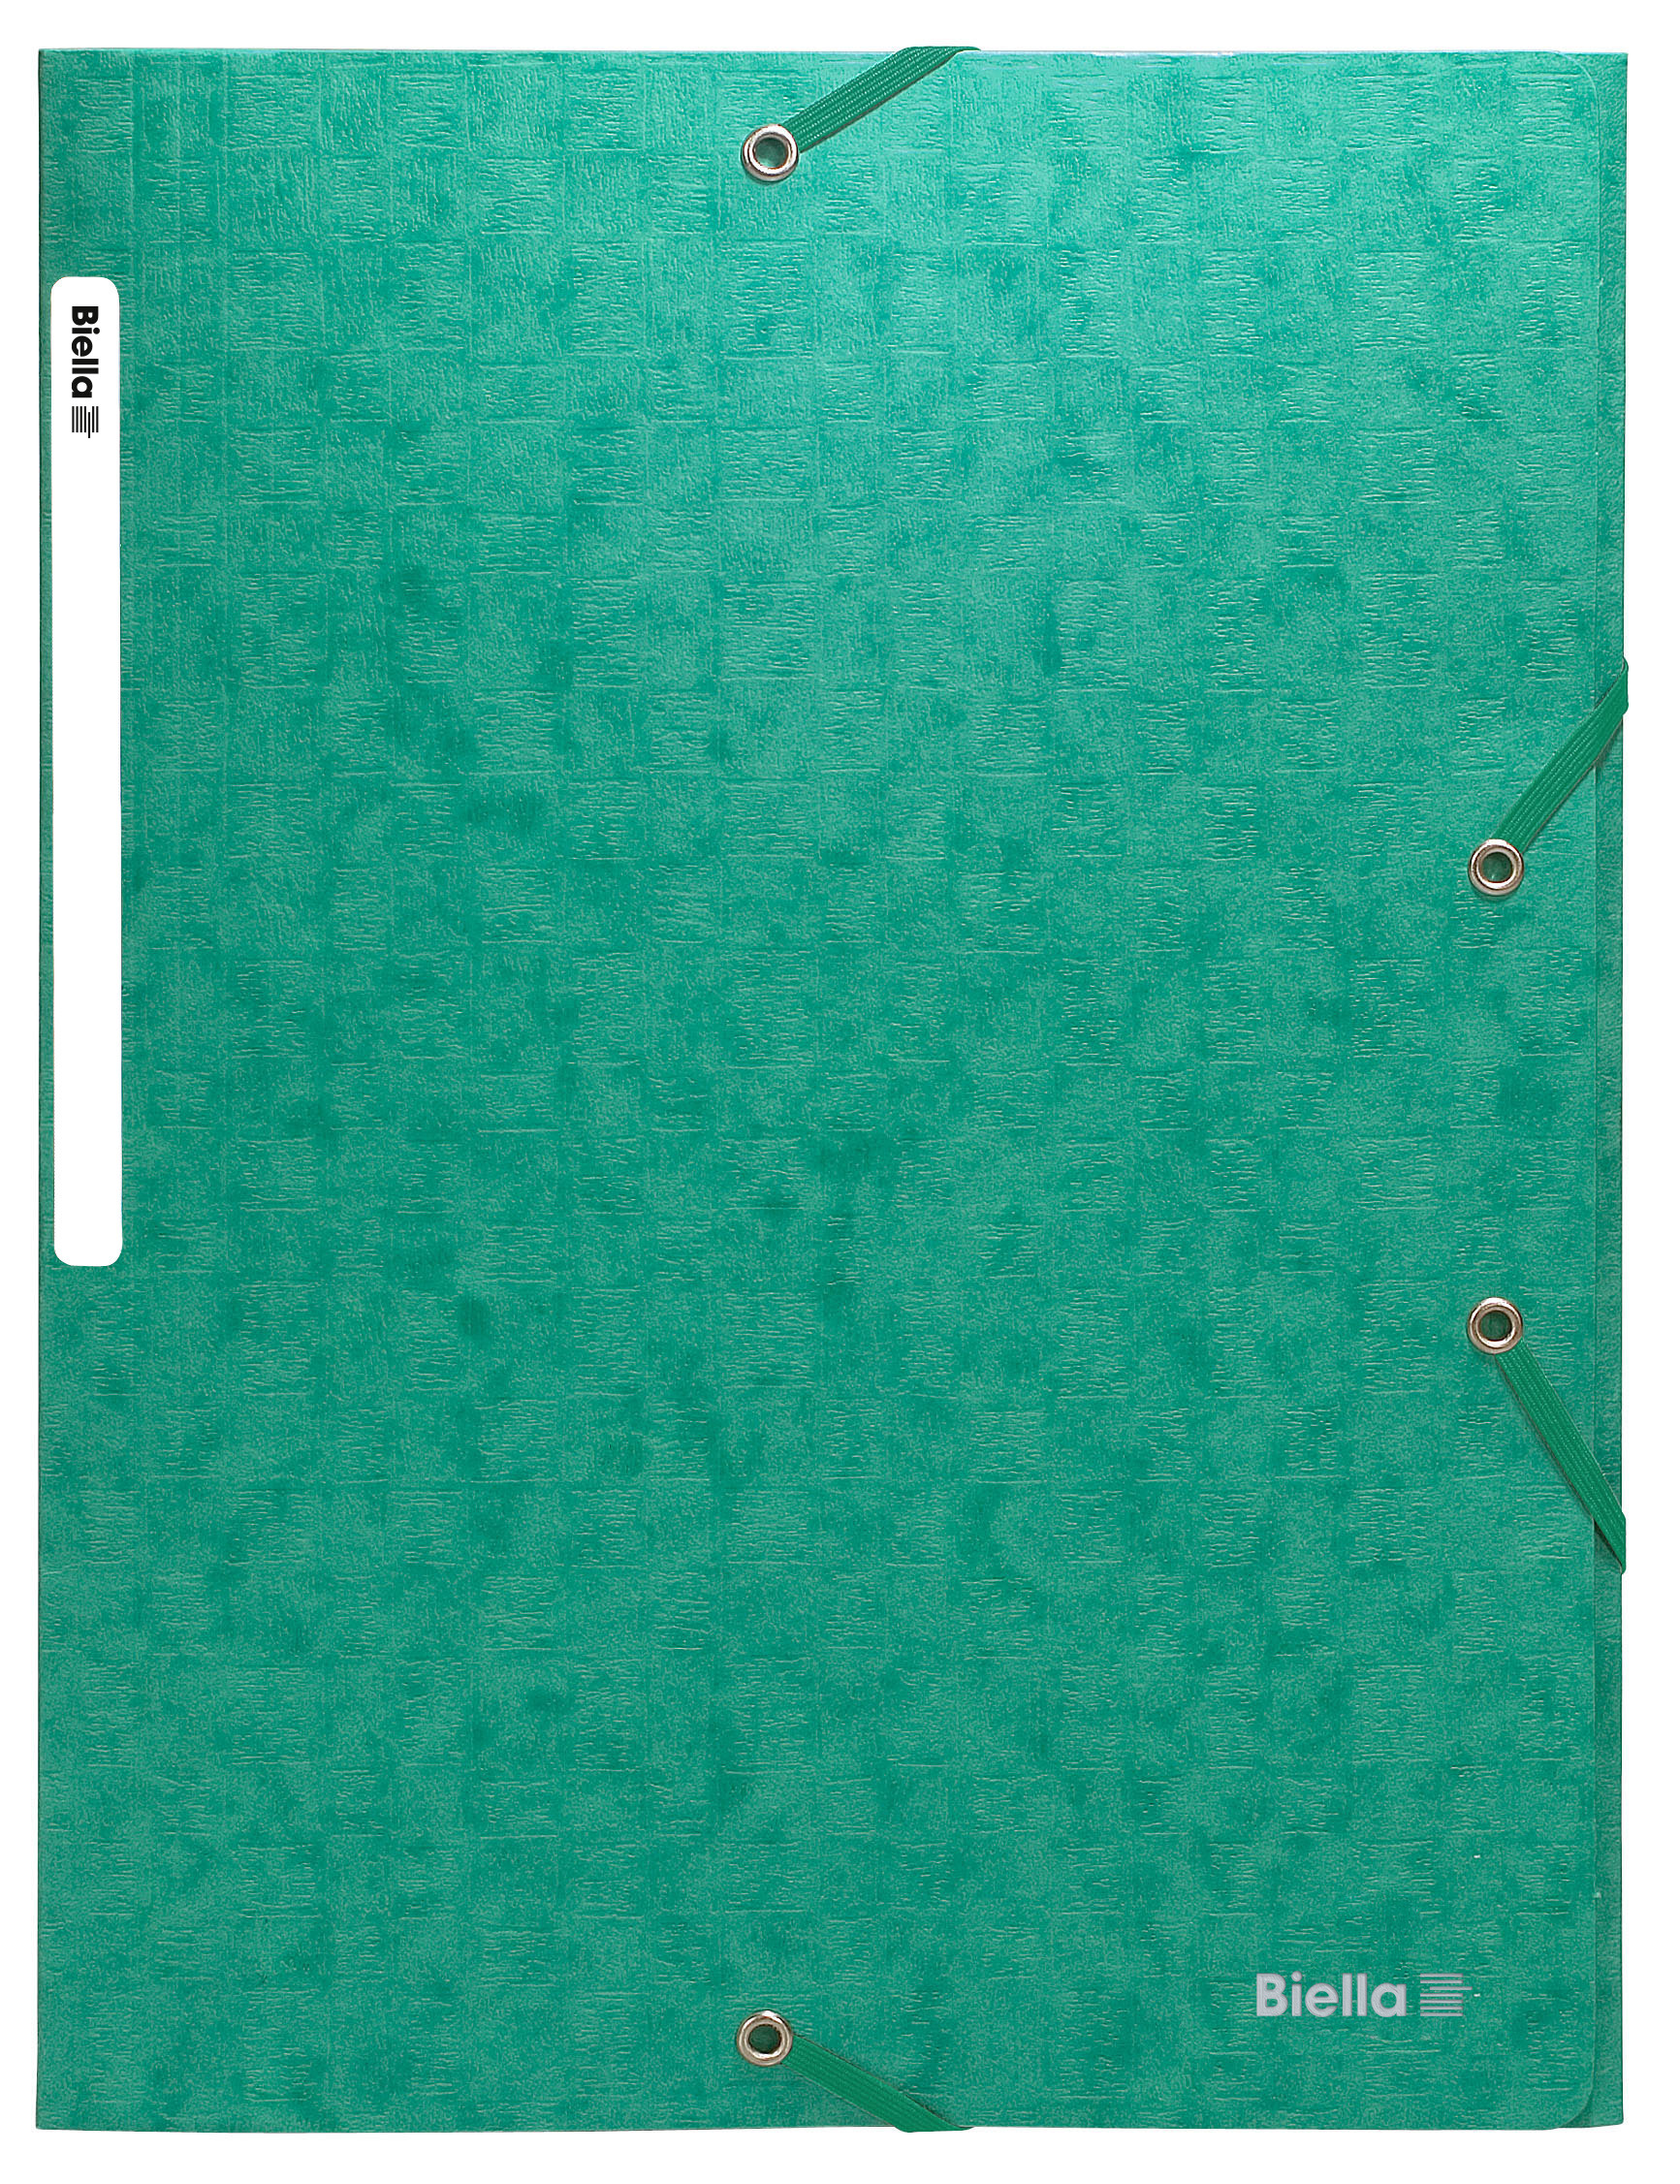 BIELLA Dossier ferm. Élastique A4 17840030U vert, 590gm2 220 flls.